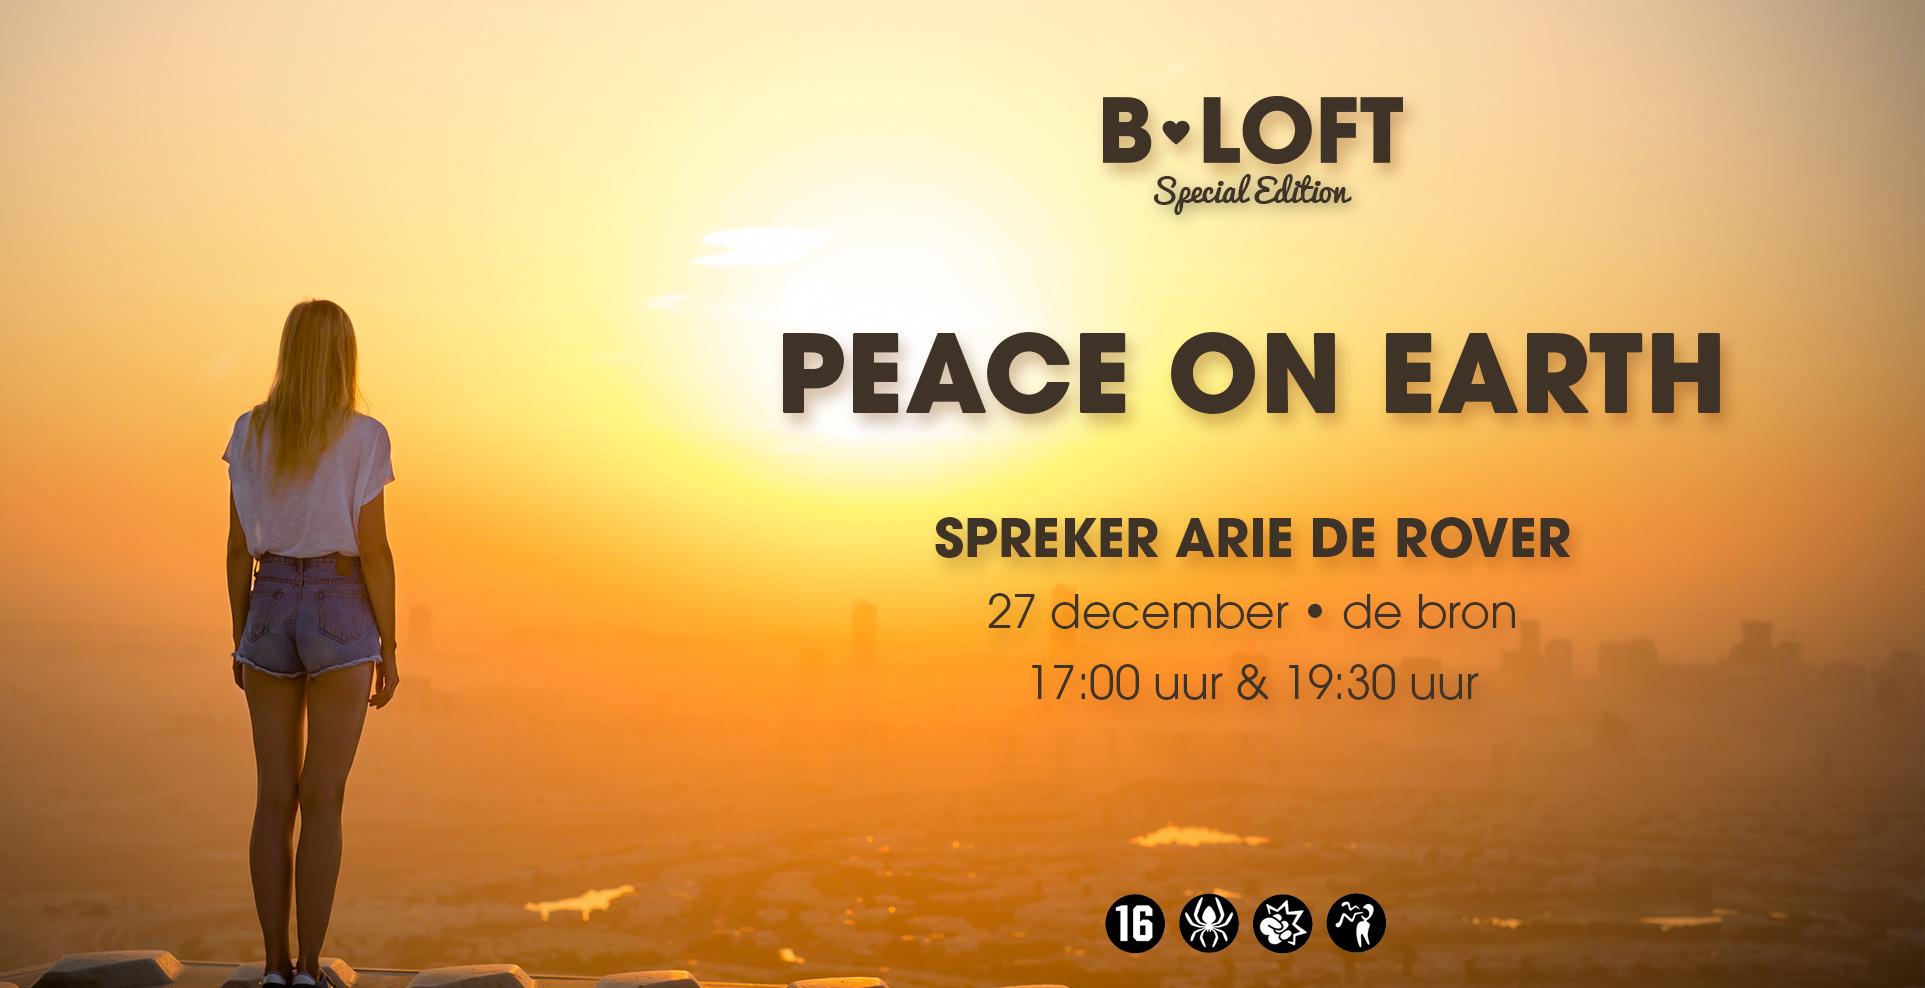 B.LOFT 27-12-2015 Peace on Earth